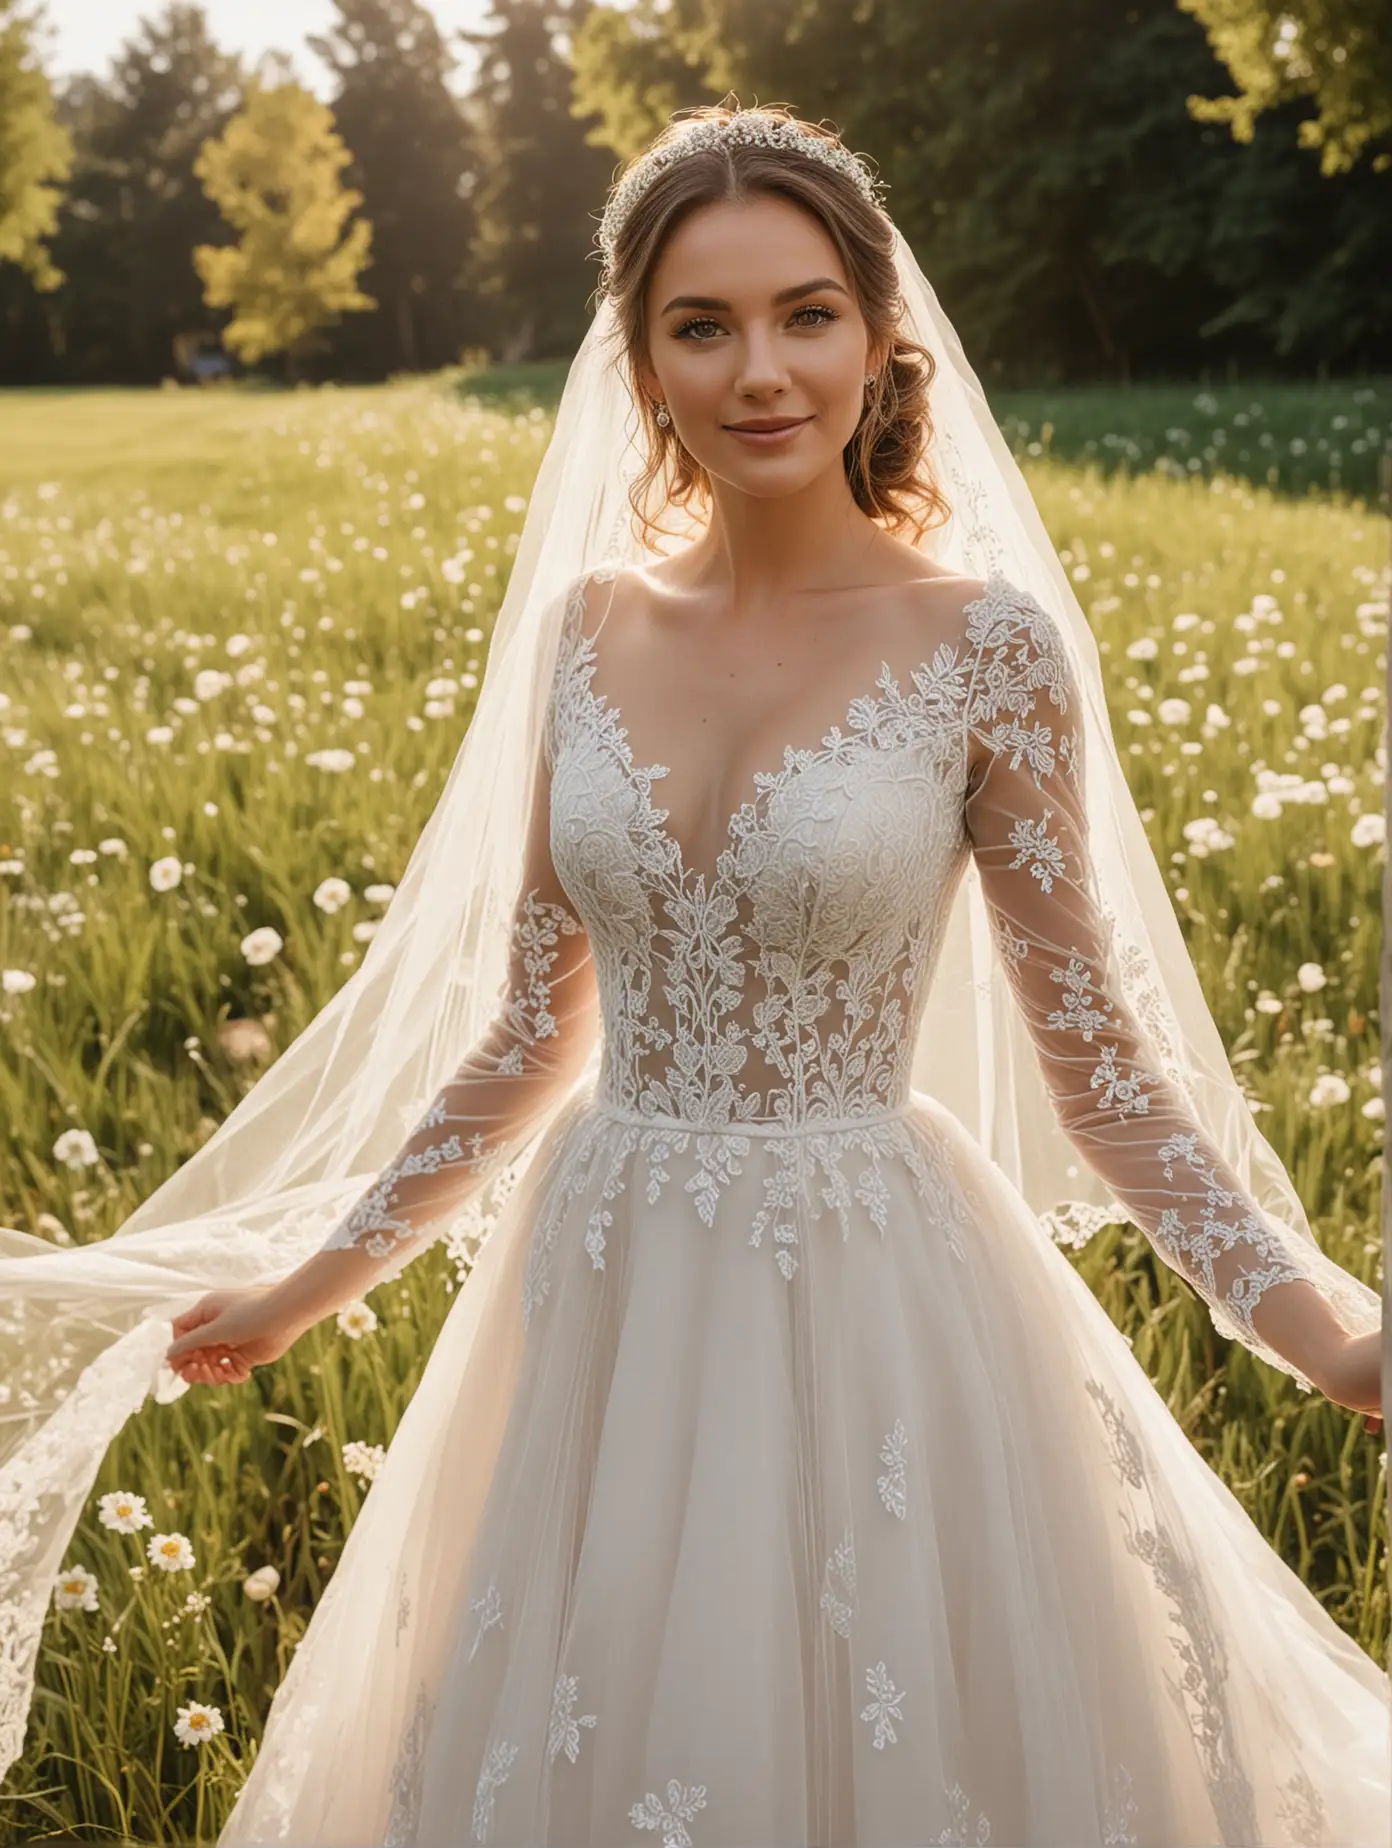 Elegant Bride in Lace Wedding Dress Holding Flowers on Green Lawn